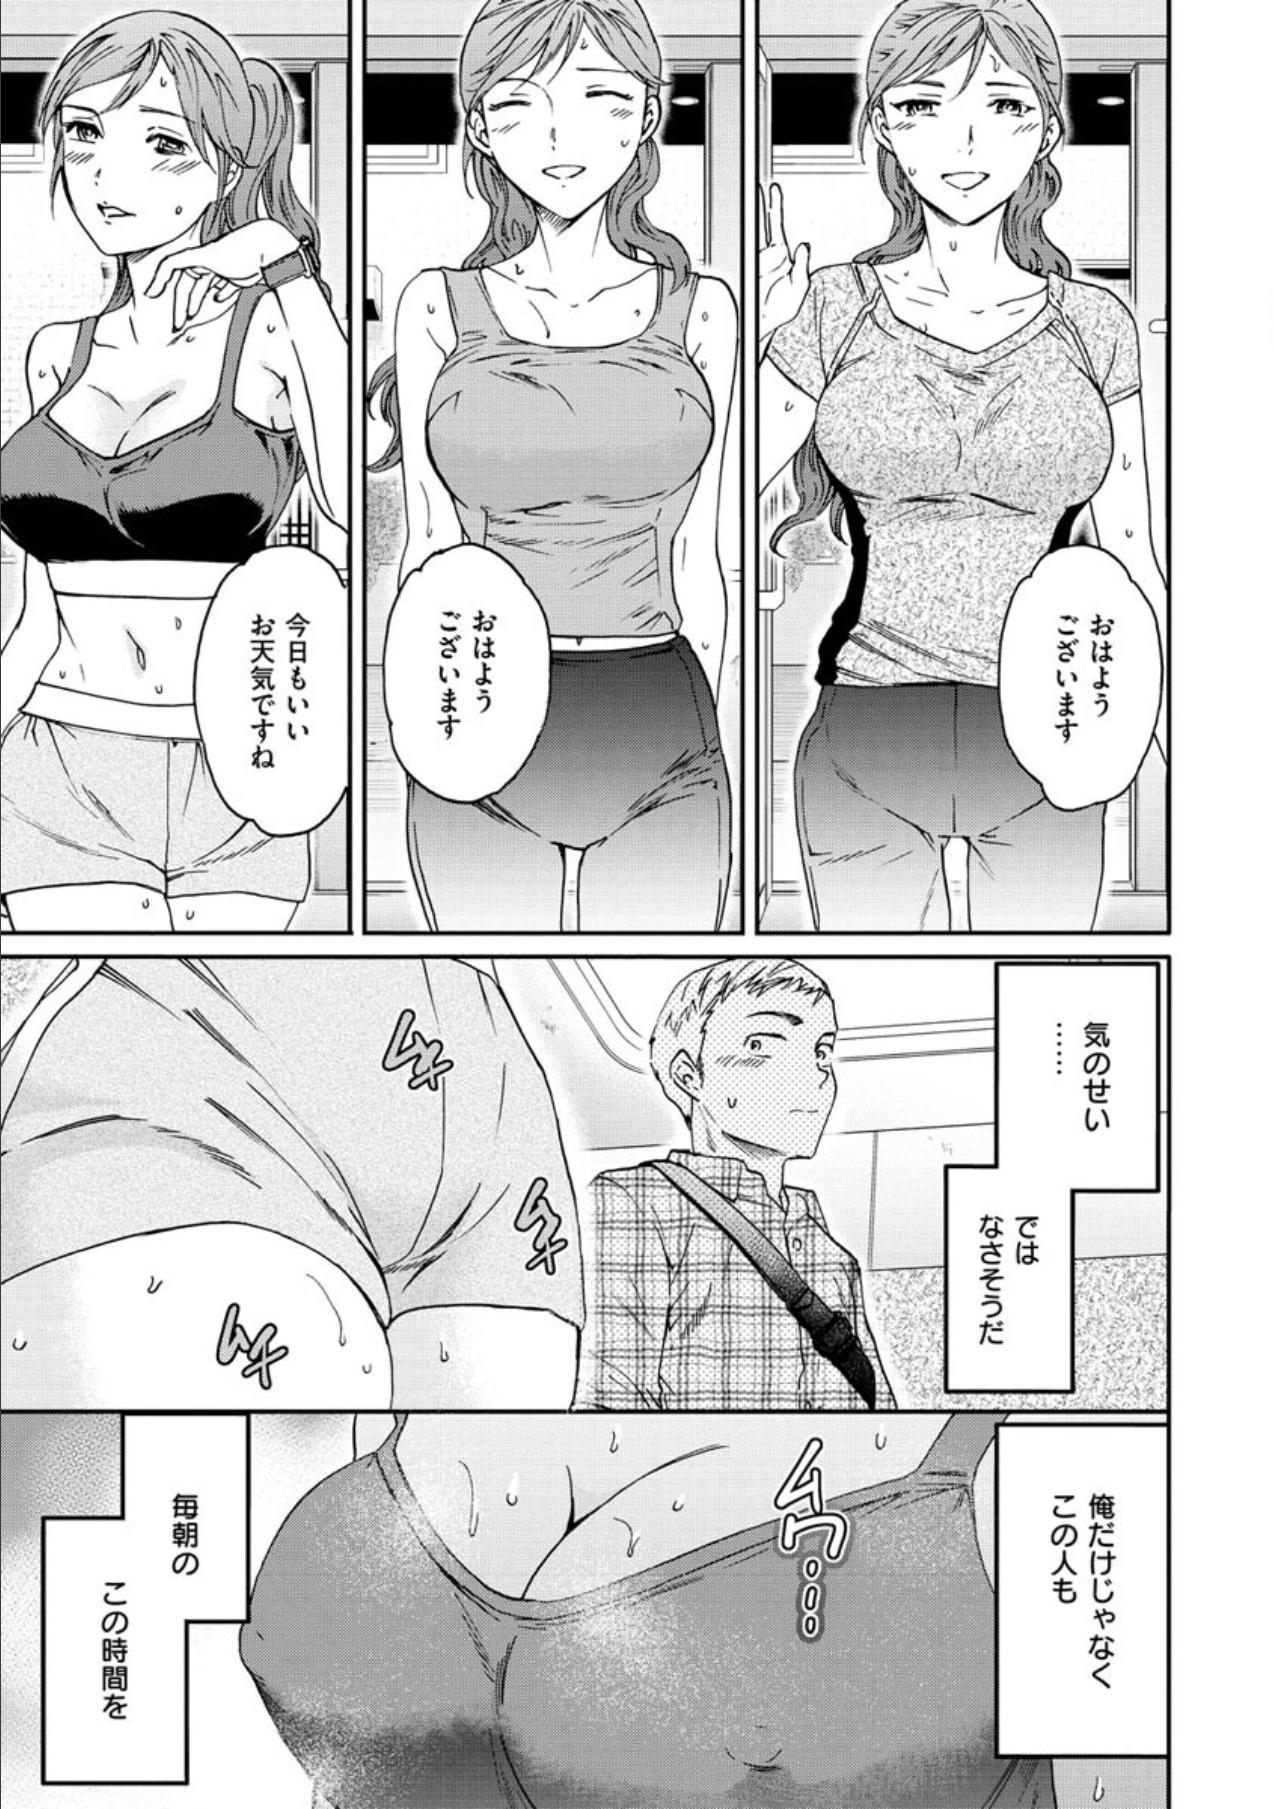 Curves Suwarete, Sonosakihe, Okuhe Chudai - Page 9